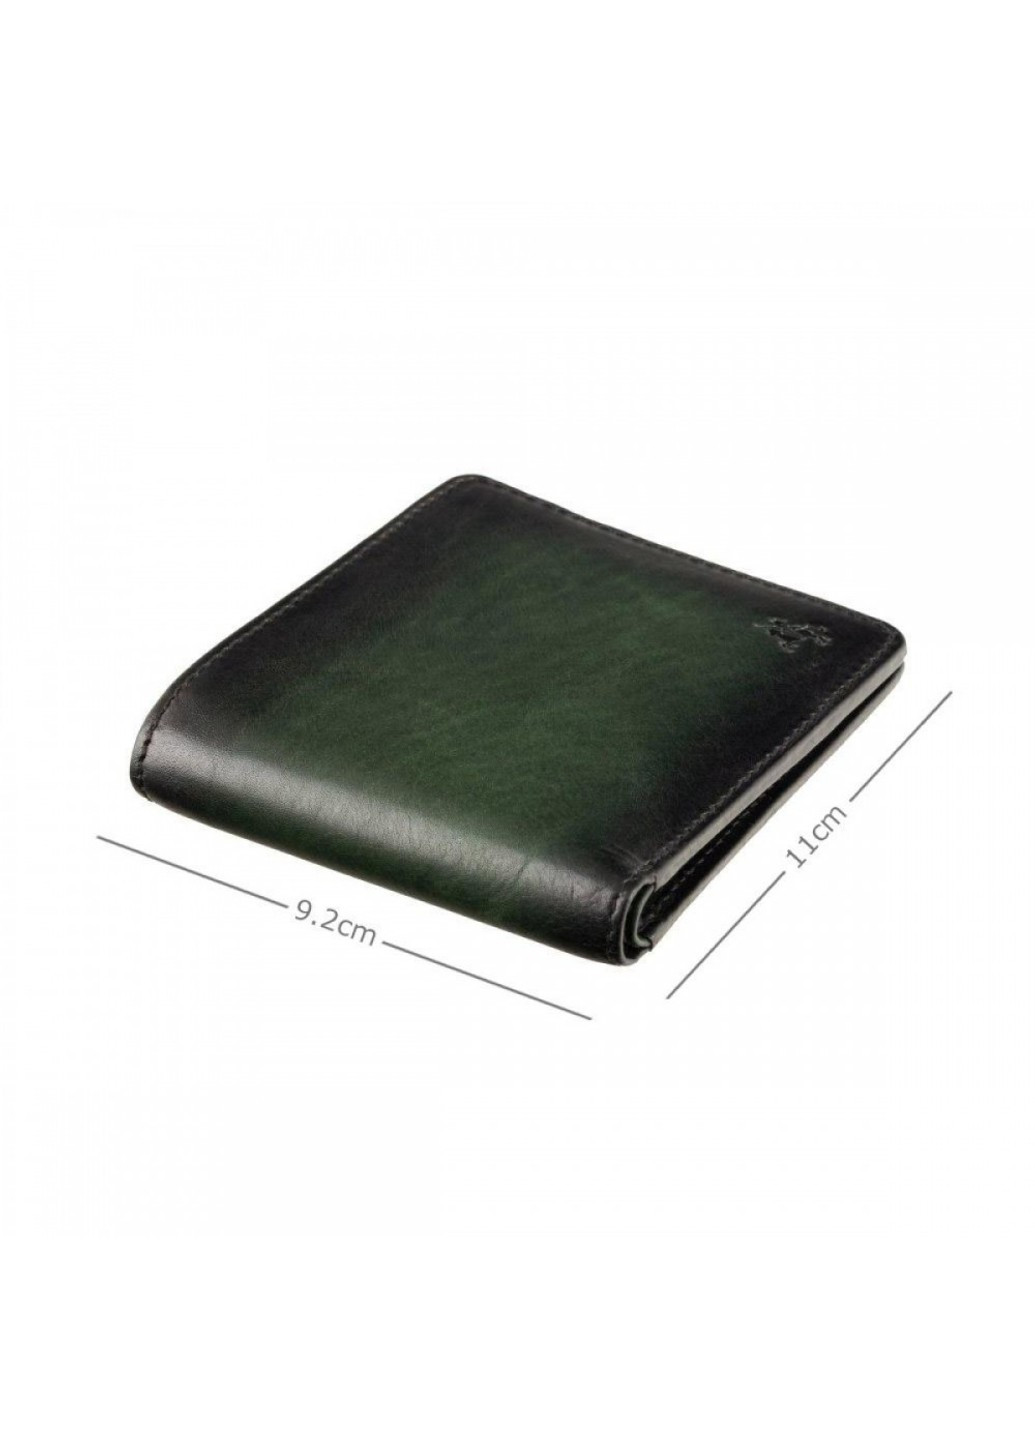 Мужской кожаный кошелек AT58 Milo c RFID (Burnish Green) Visconti (261856050)